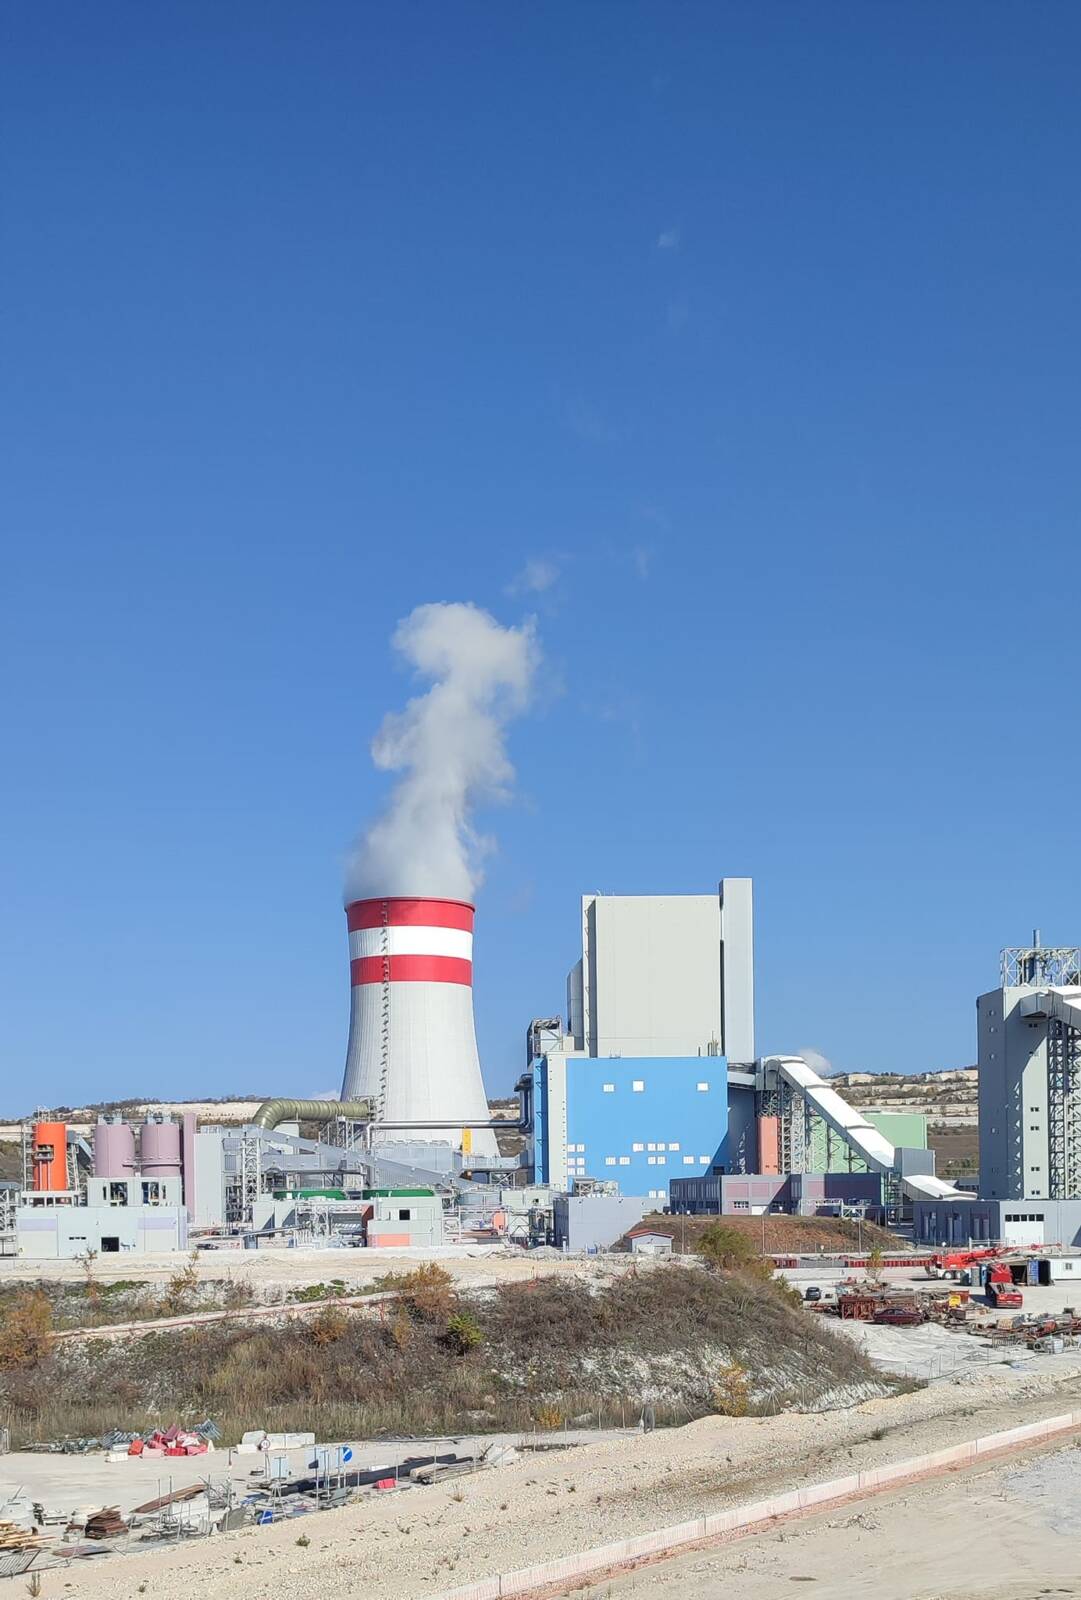 AHΣ Αγίου Δημητρίου και Πτολεμαΐδα V στις δύο πρώτες θέσεις, μεταξύ των θερμικών εργοστασίων της Επιχείρησης, από πλευράς εκπομπών αερίων του θερμοκηπίου το α΄ εξάμηνο του 2023